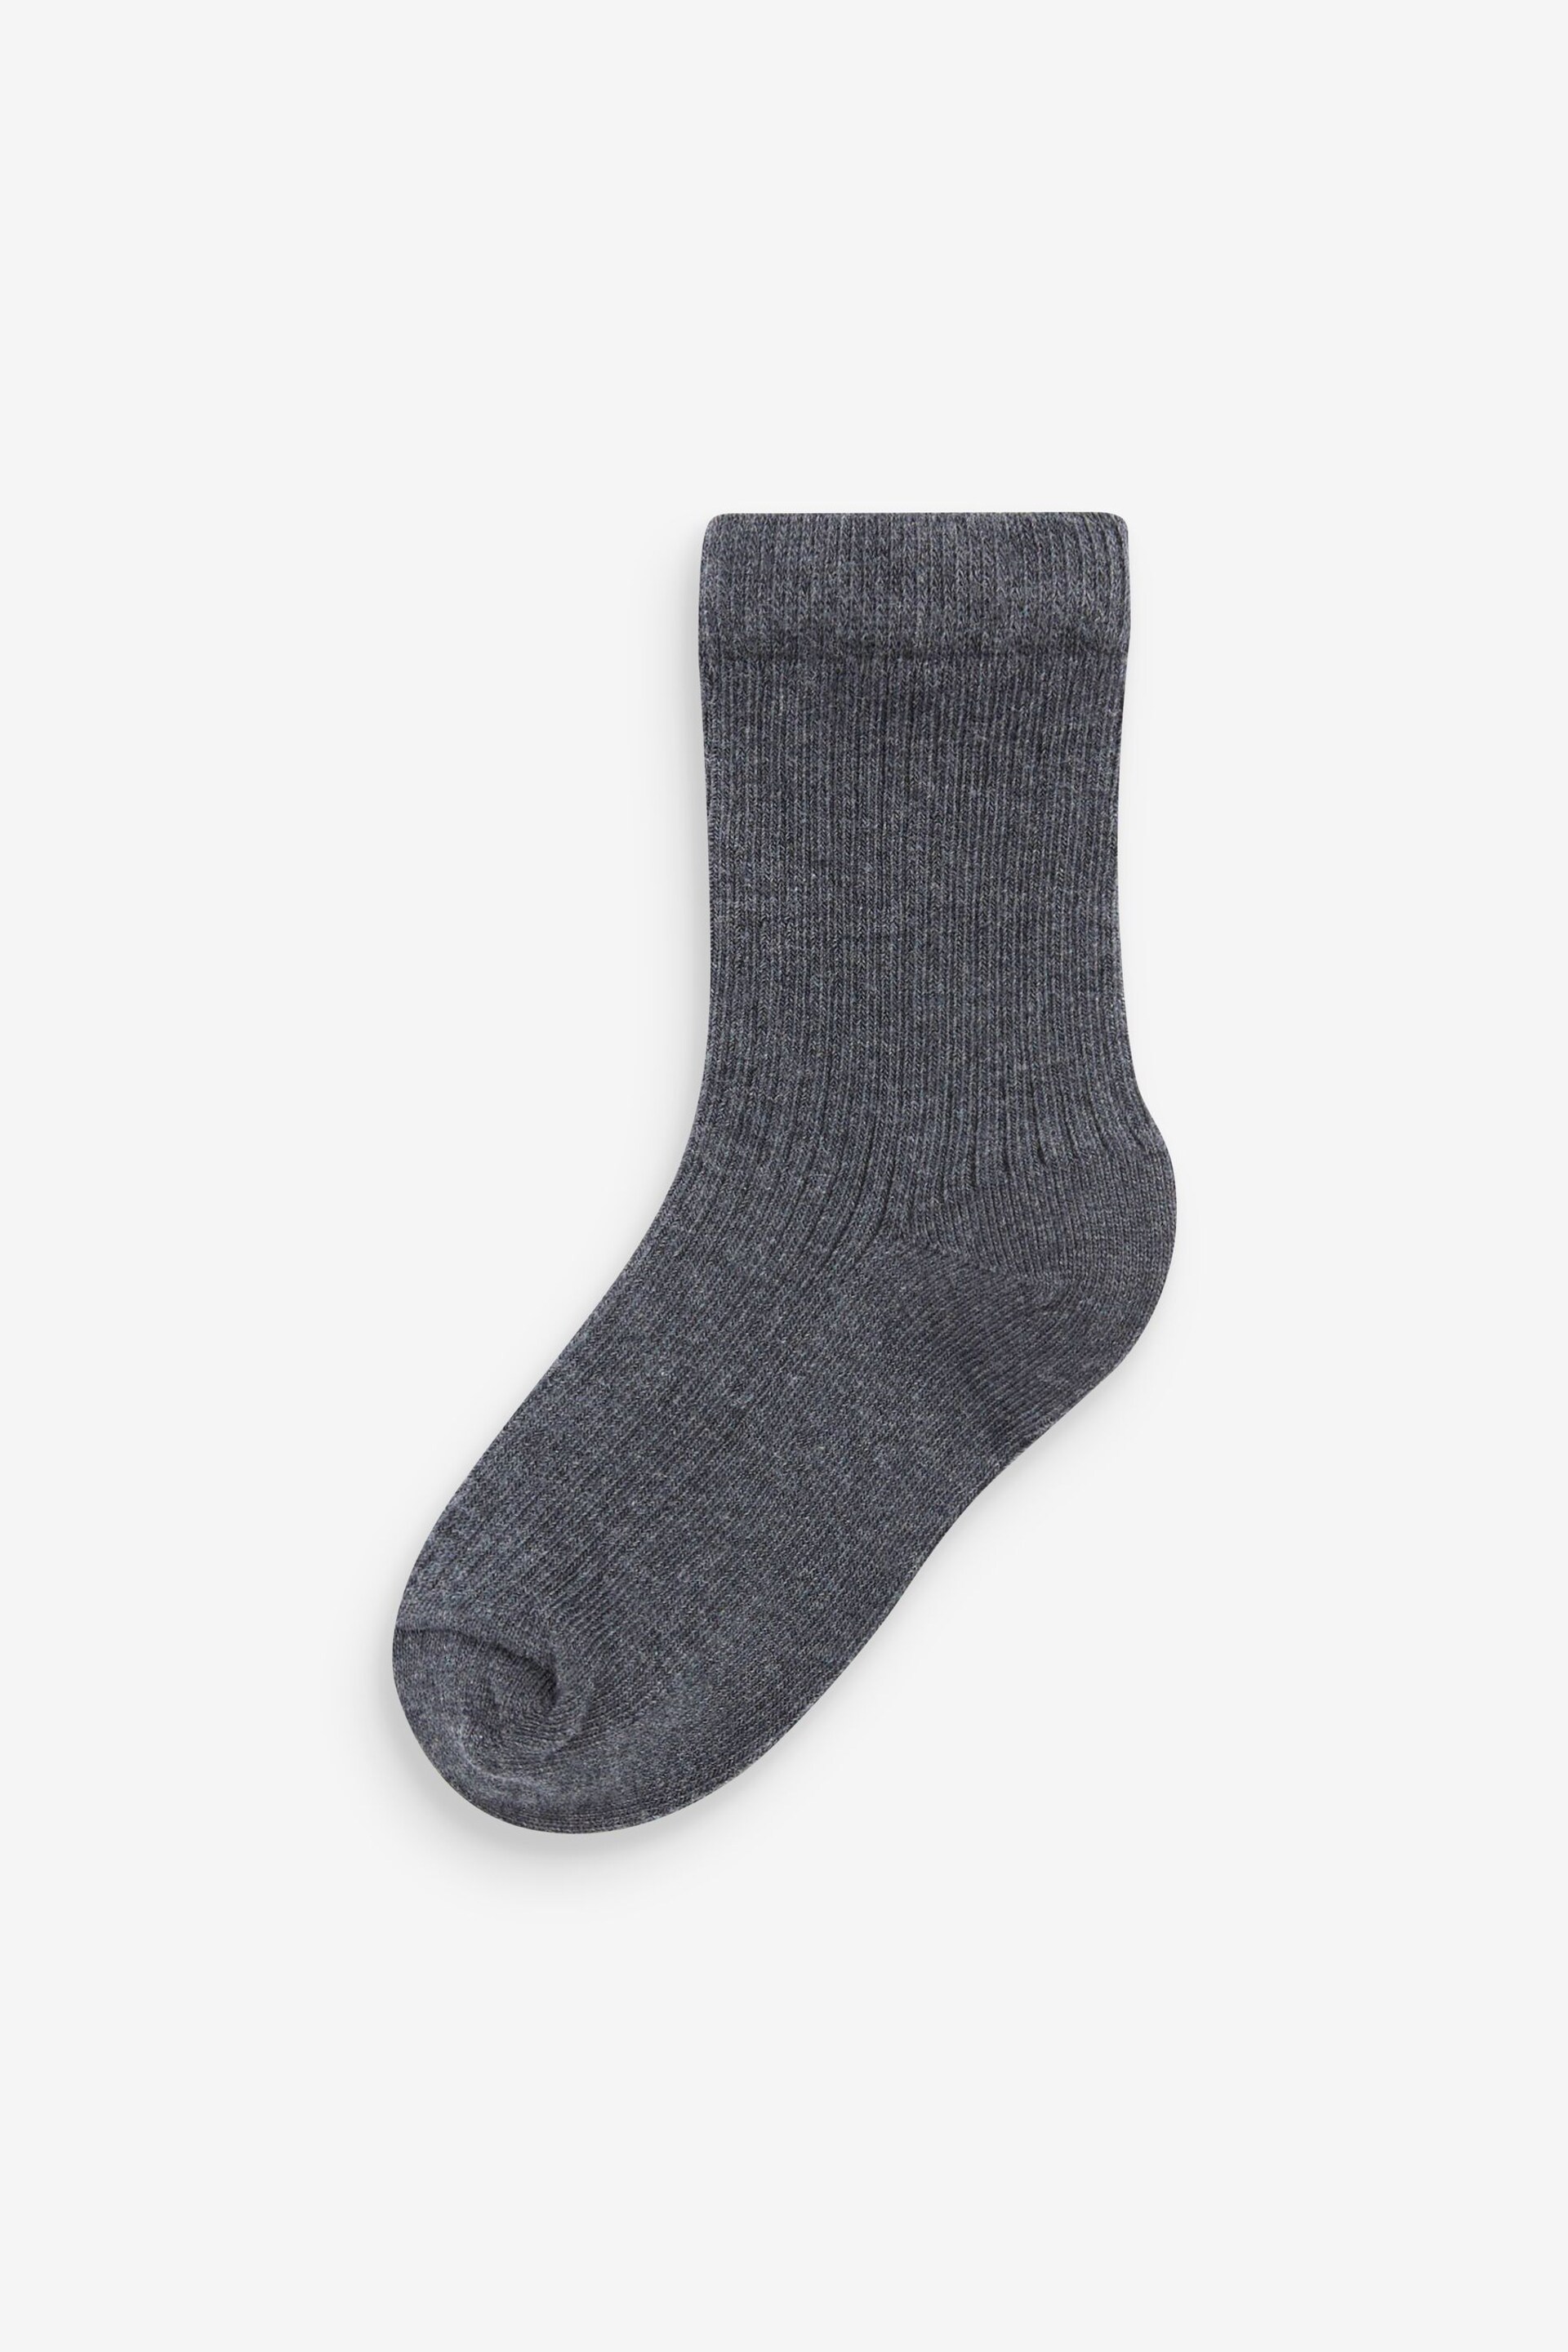 Khaki Green/Grey Cotton Rich Fine Rib Socks 7 Pack - Image 6 of 8